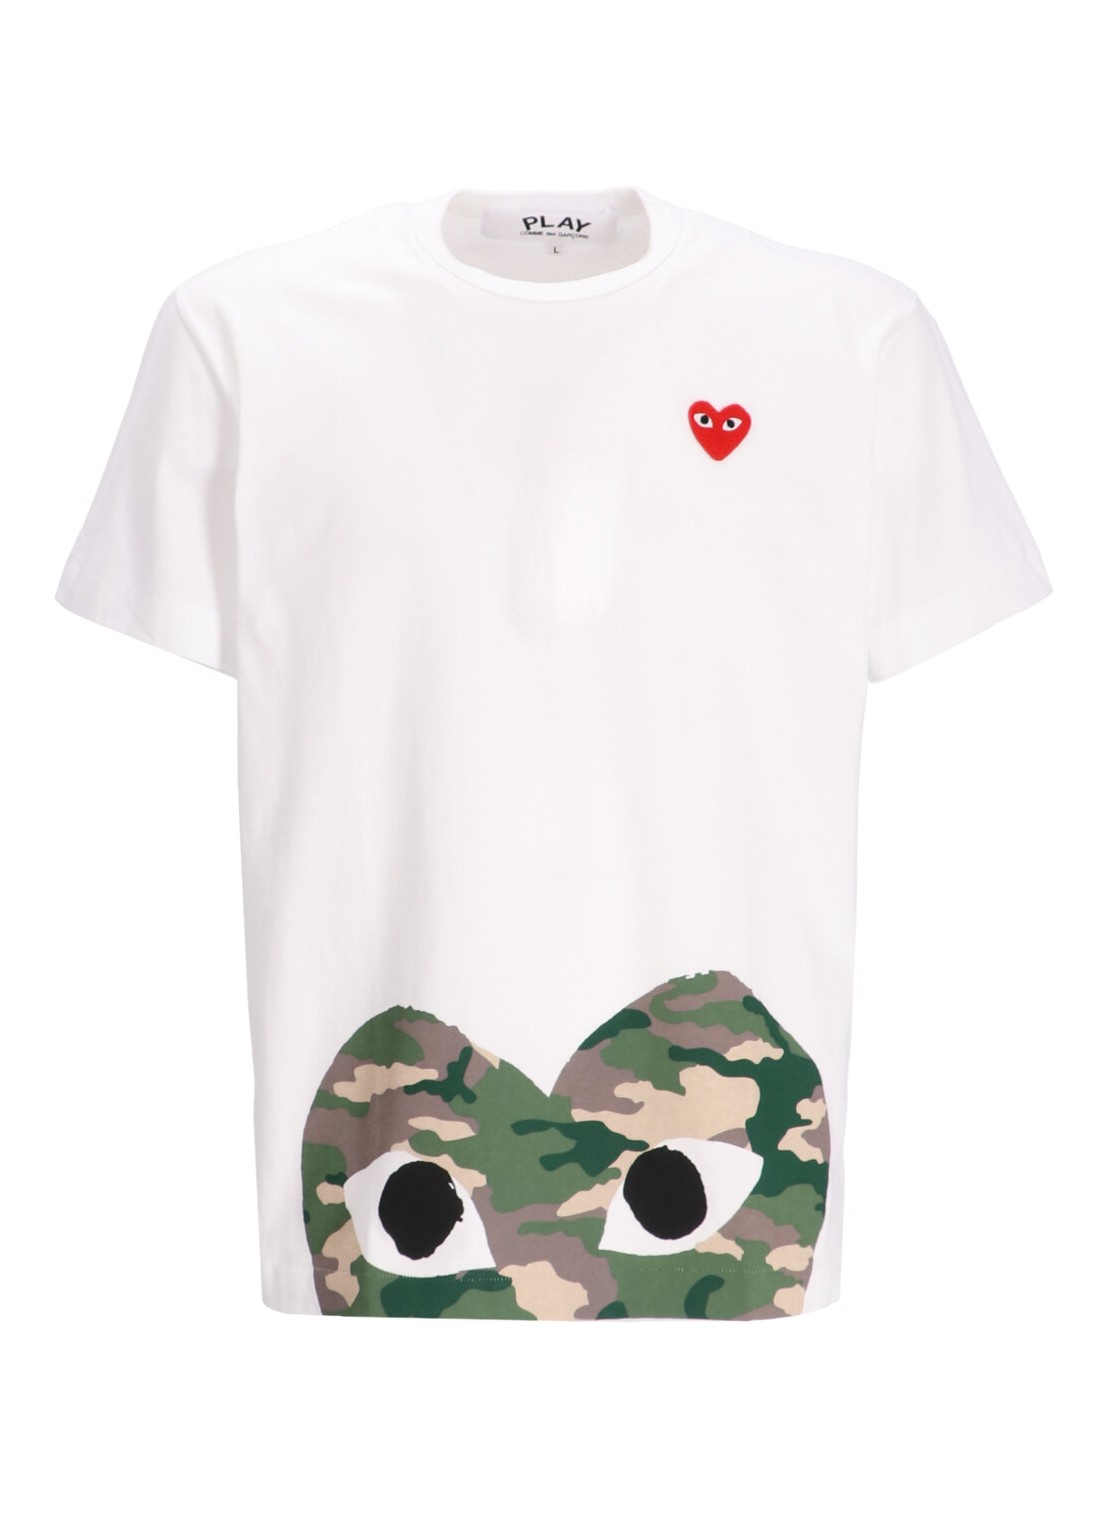 Camiseta comme des garcons t-shirt manplay camouflage t-shirt - axt244051 white talla XXL
 